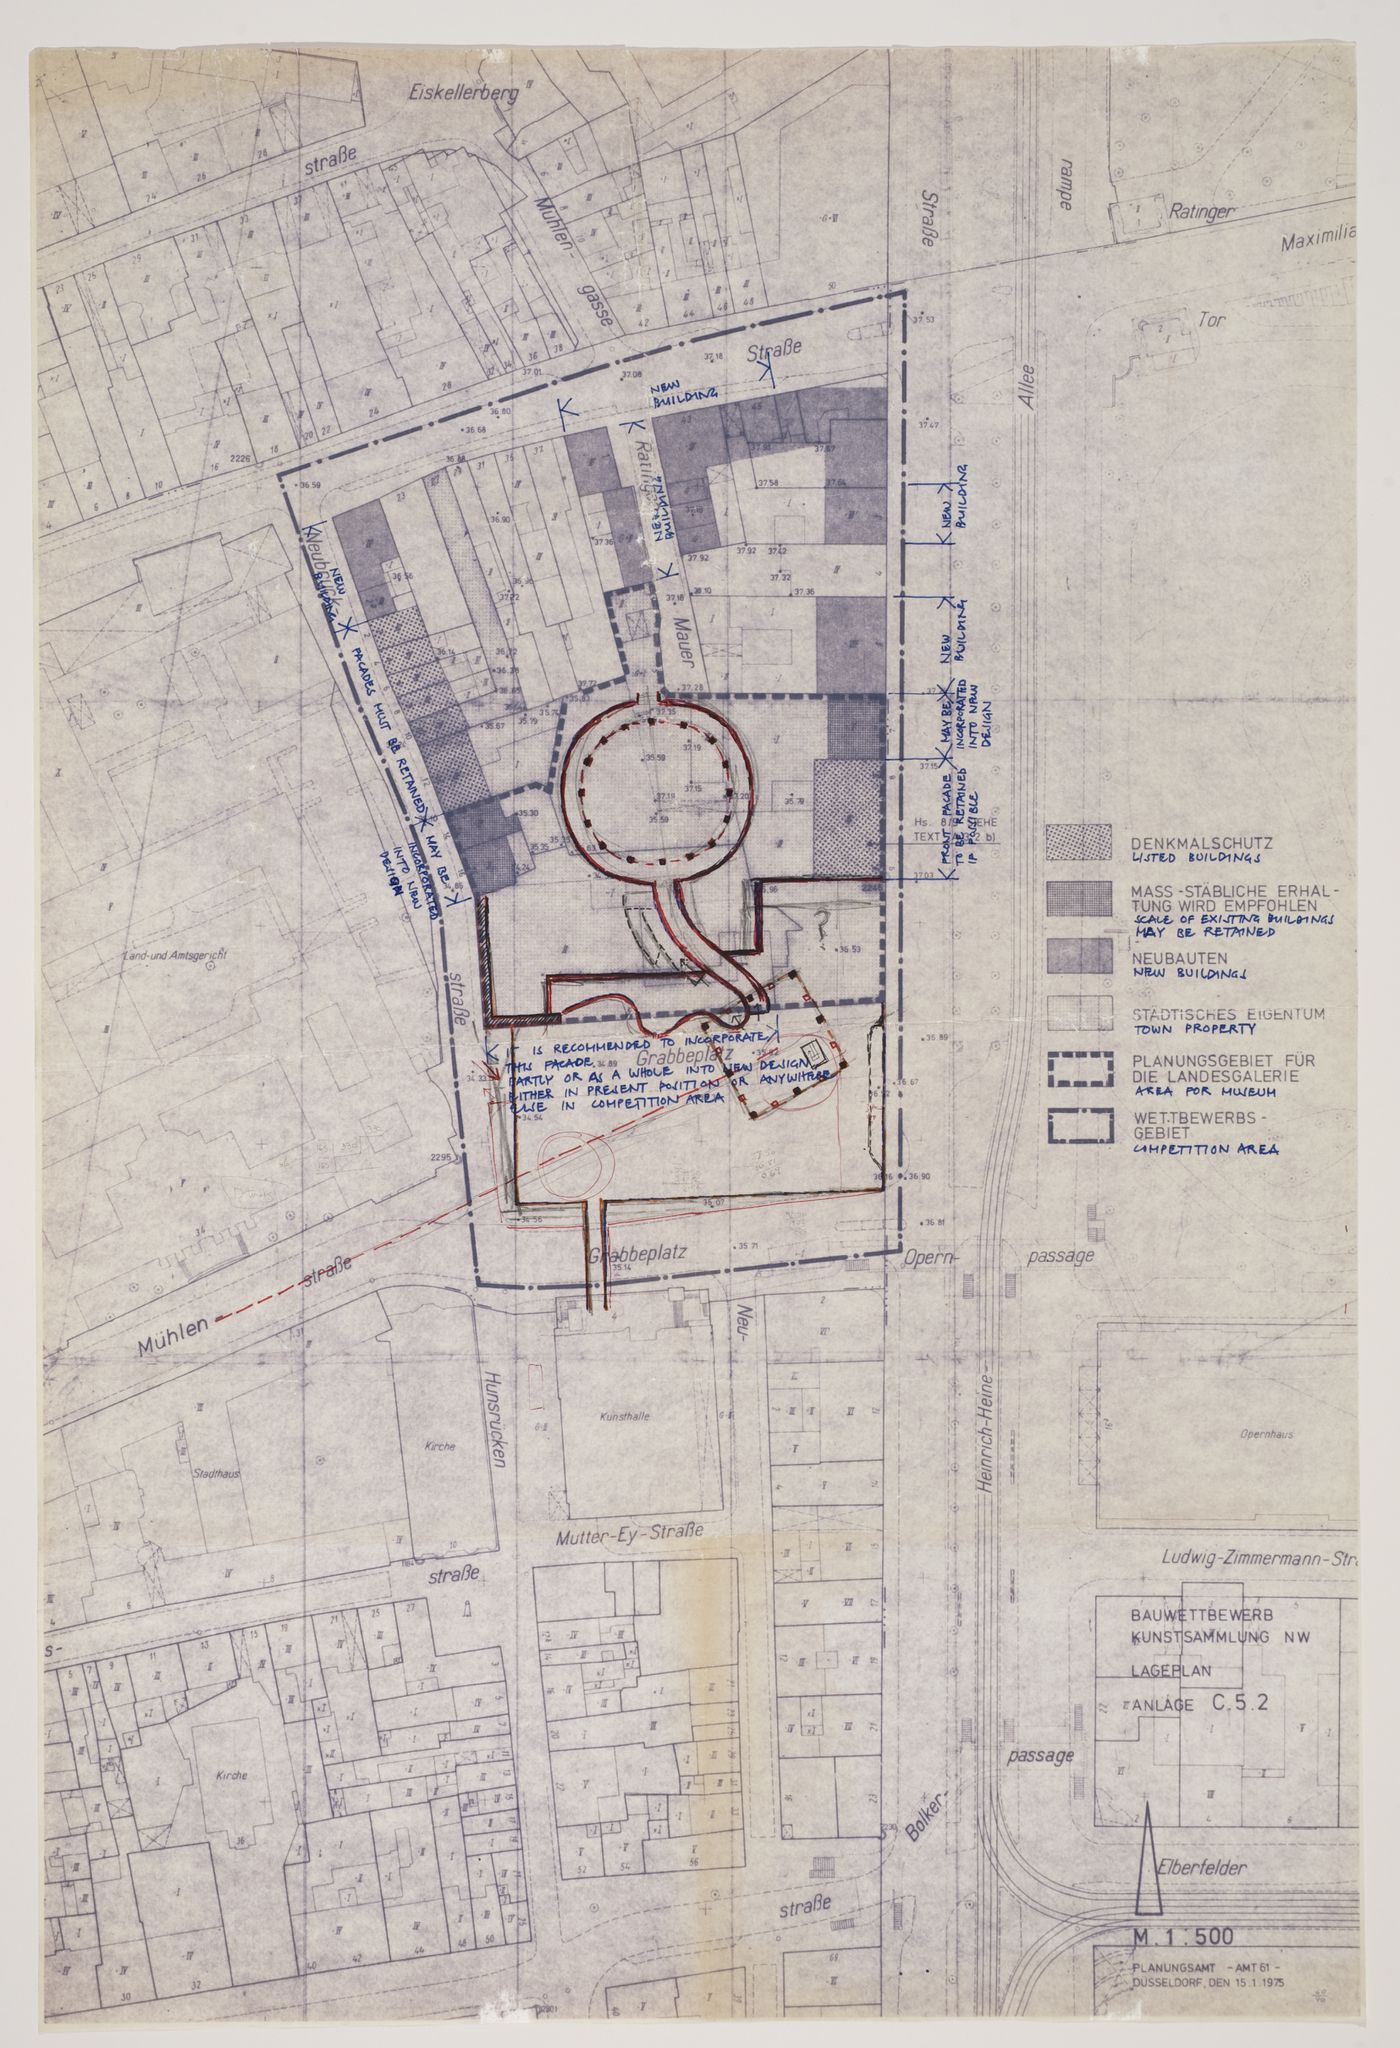 Nordrhein-Westfalen Museum, Dusseldorf, Germany: site plan